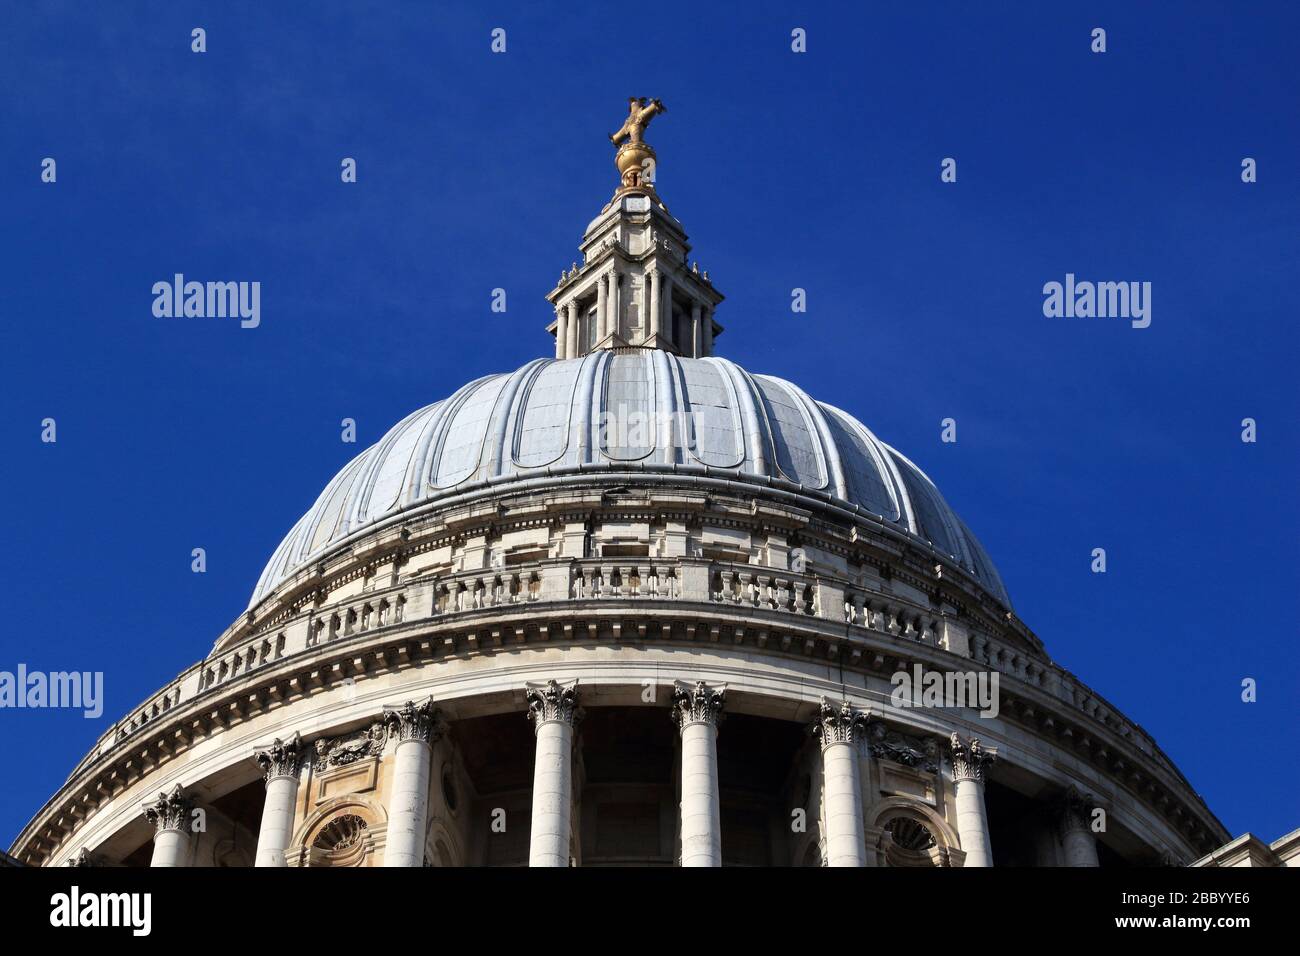 London, UK. Saint Paul's Cathedral facade architecture. London landmark. Stock Photo